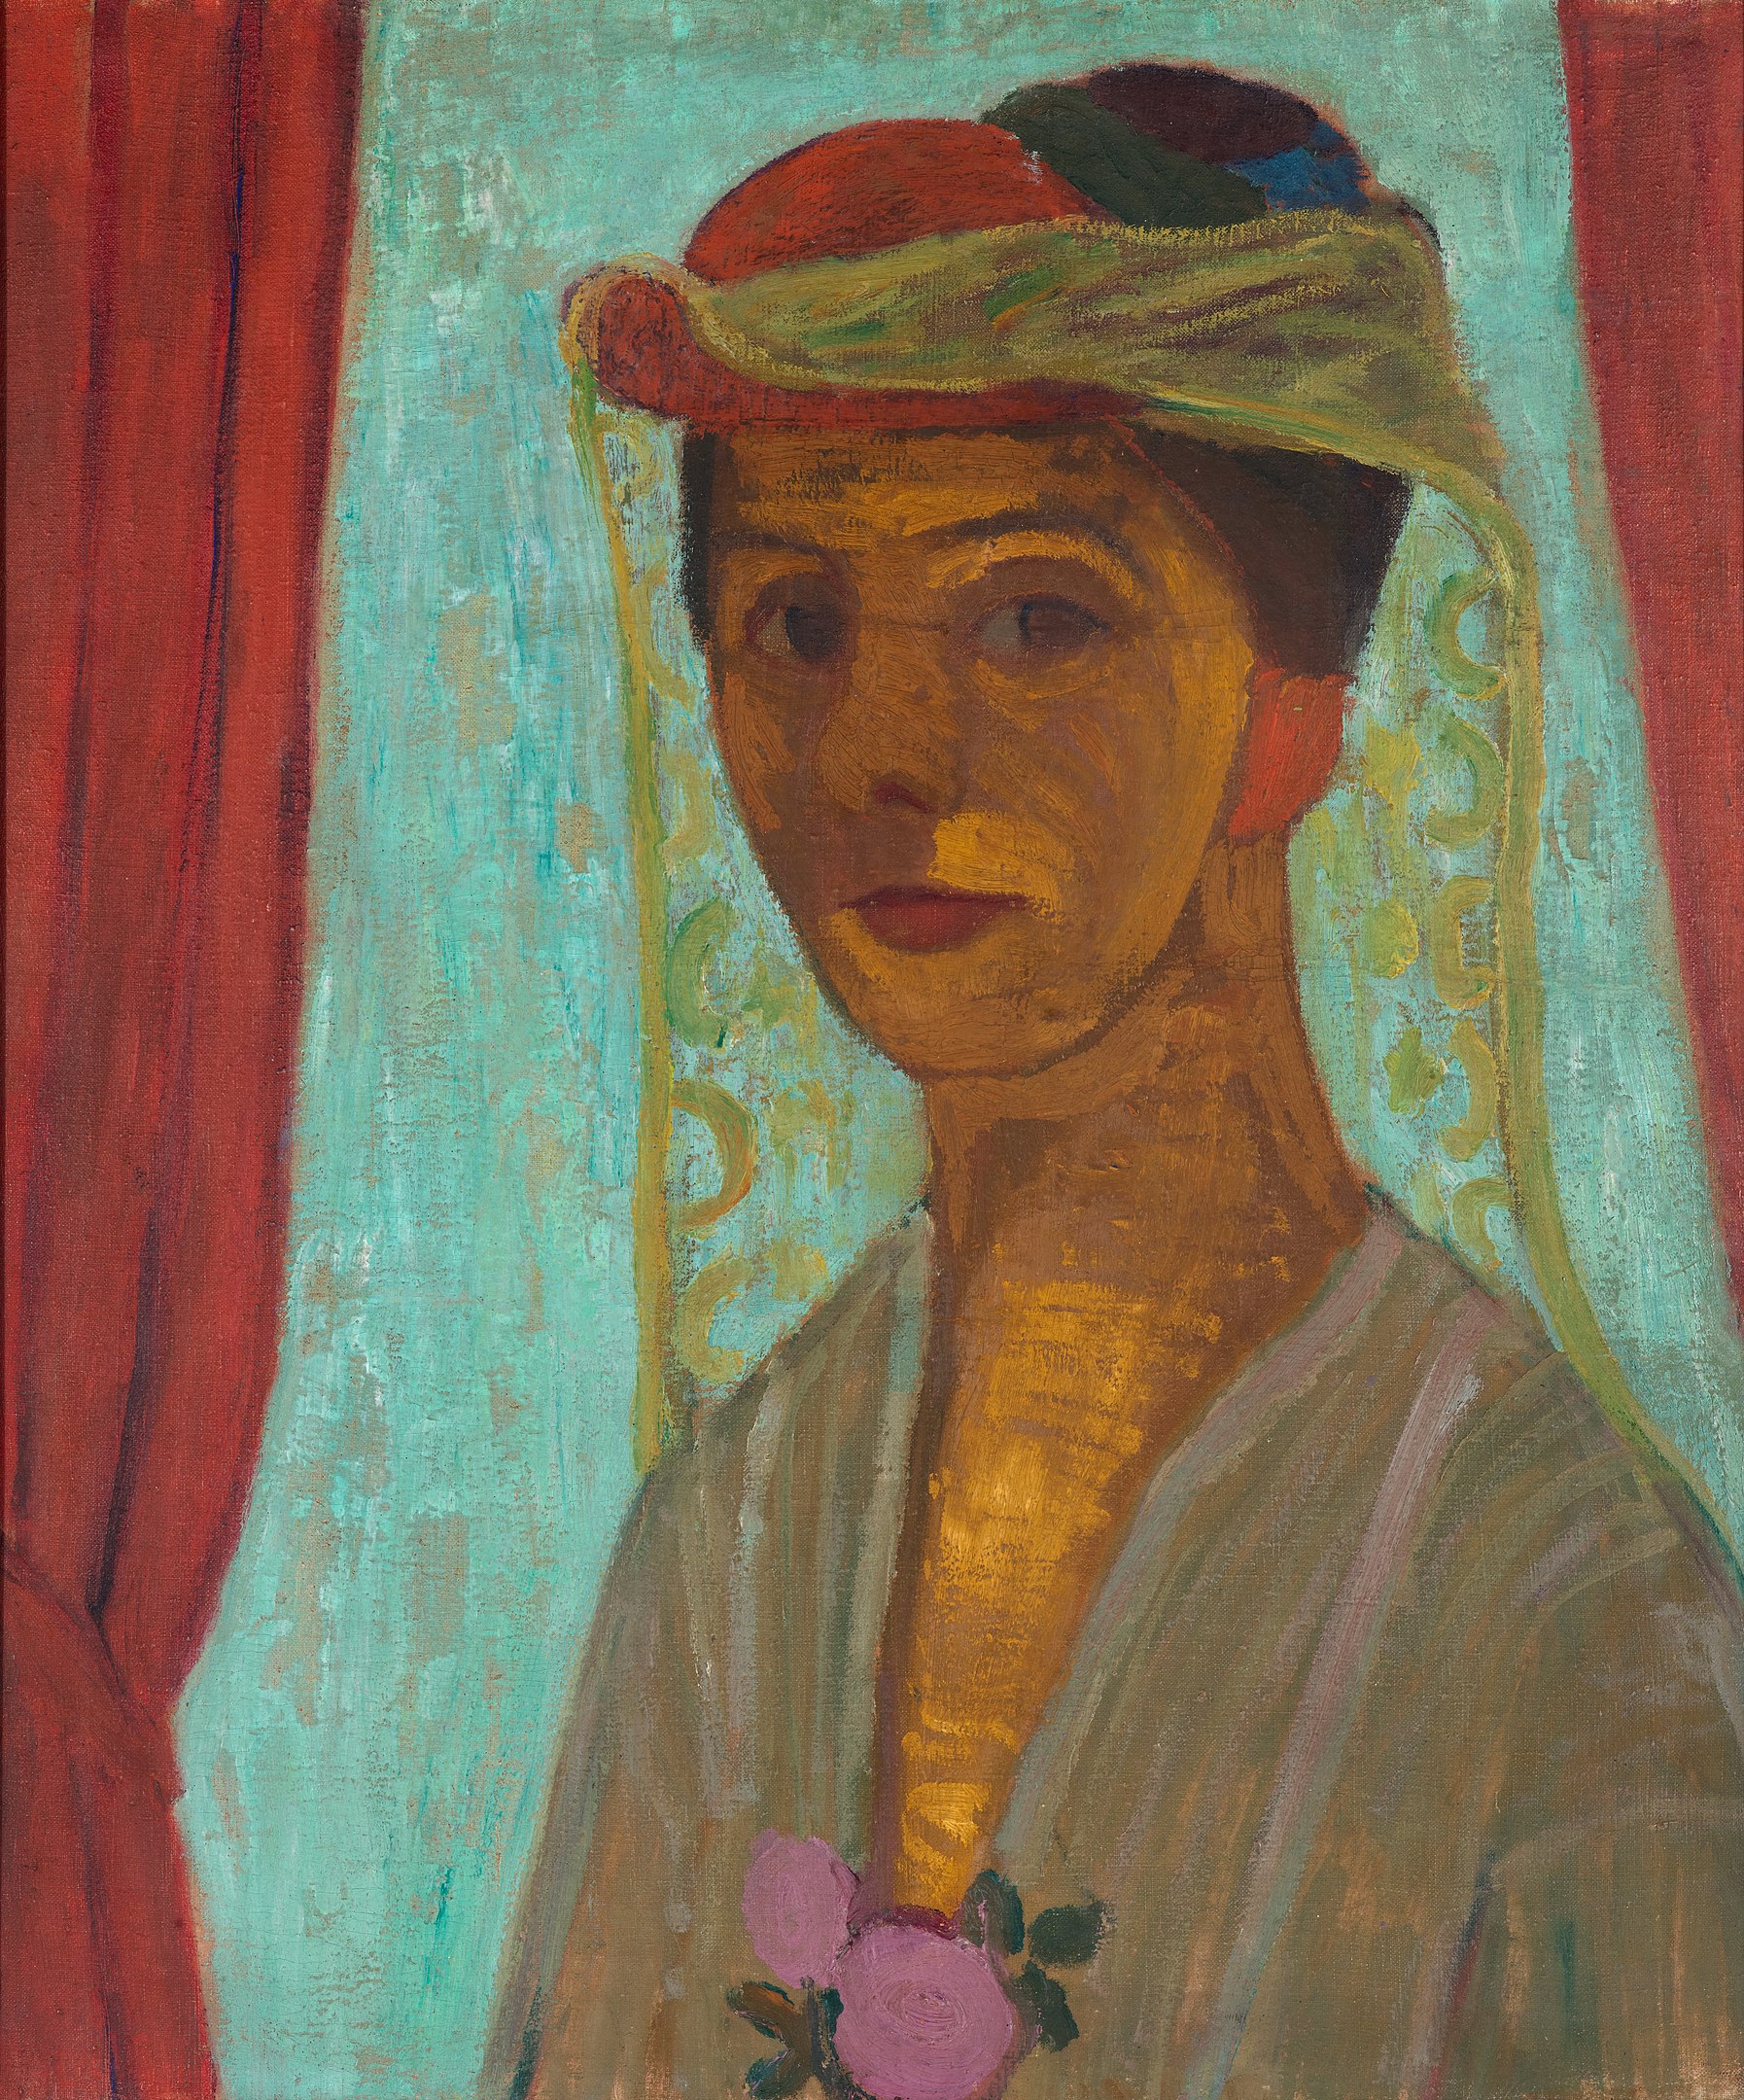 Şapkalı ve Peçeli Otoportre (orig. "Self-Portrait With a Hat and Veil") by Paula Modersohn-Becker - 1906/1907 - 79.8 x 89,6 cm 